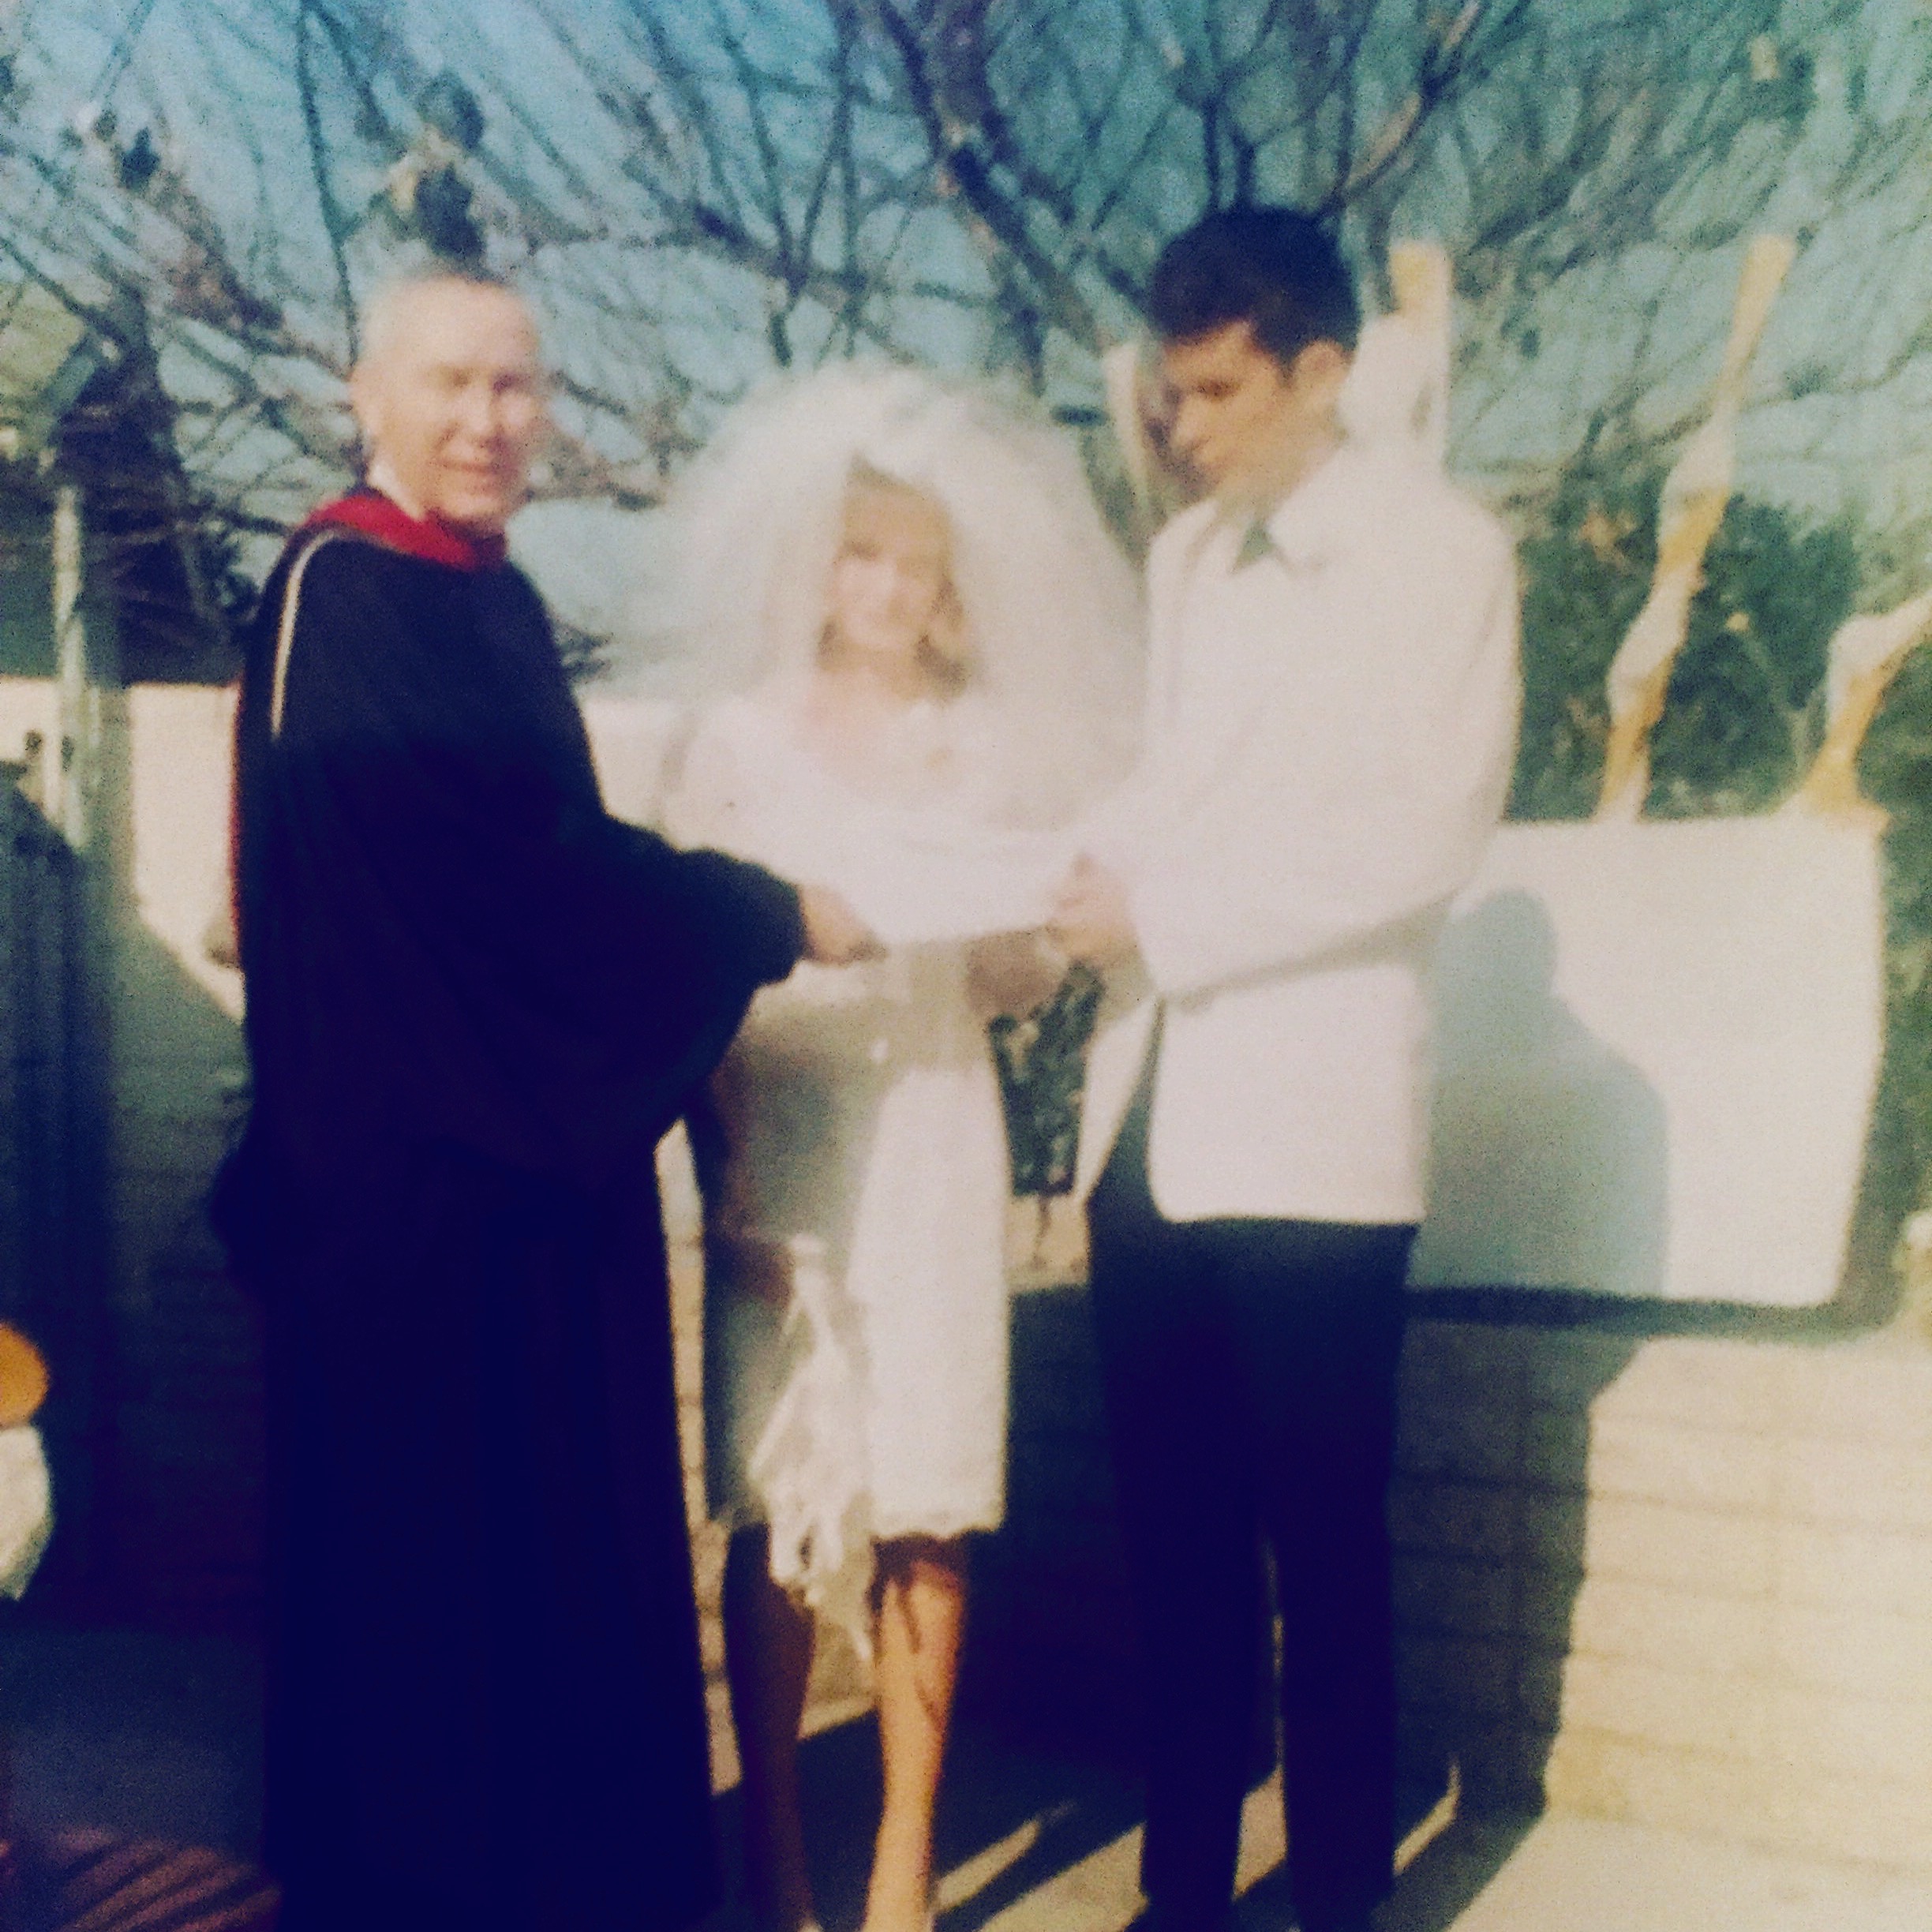 Geneva and Jerry’s wedding day, December 30, 1967